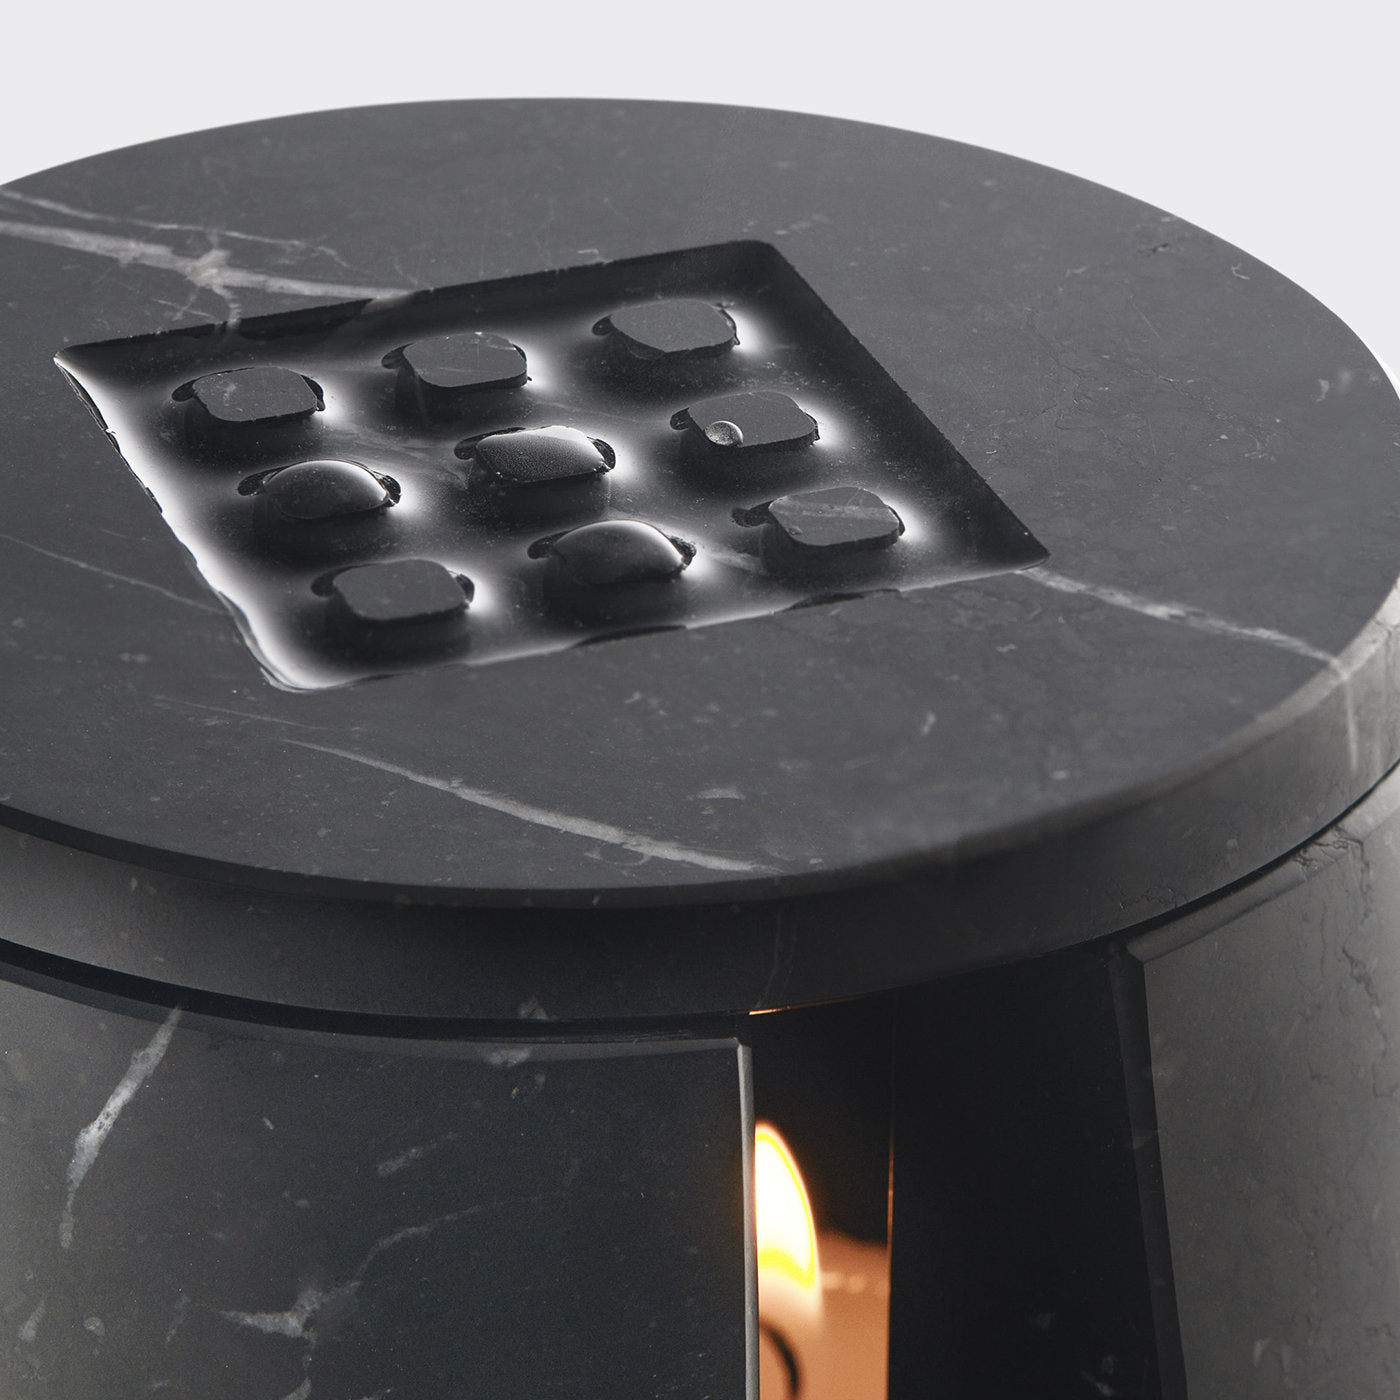 Oracolo Essential-Oil Burner - Design Charalampos Potzidis - Alternative view 1